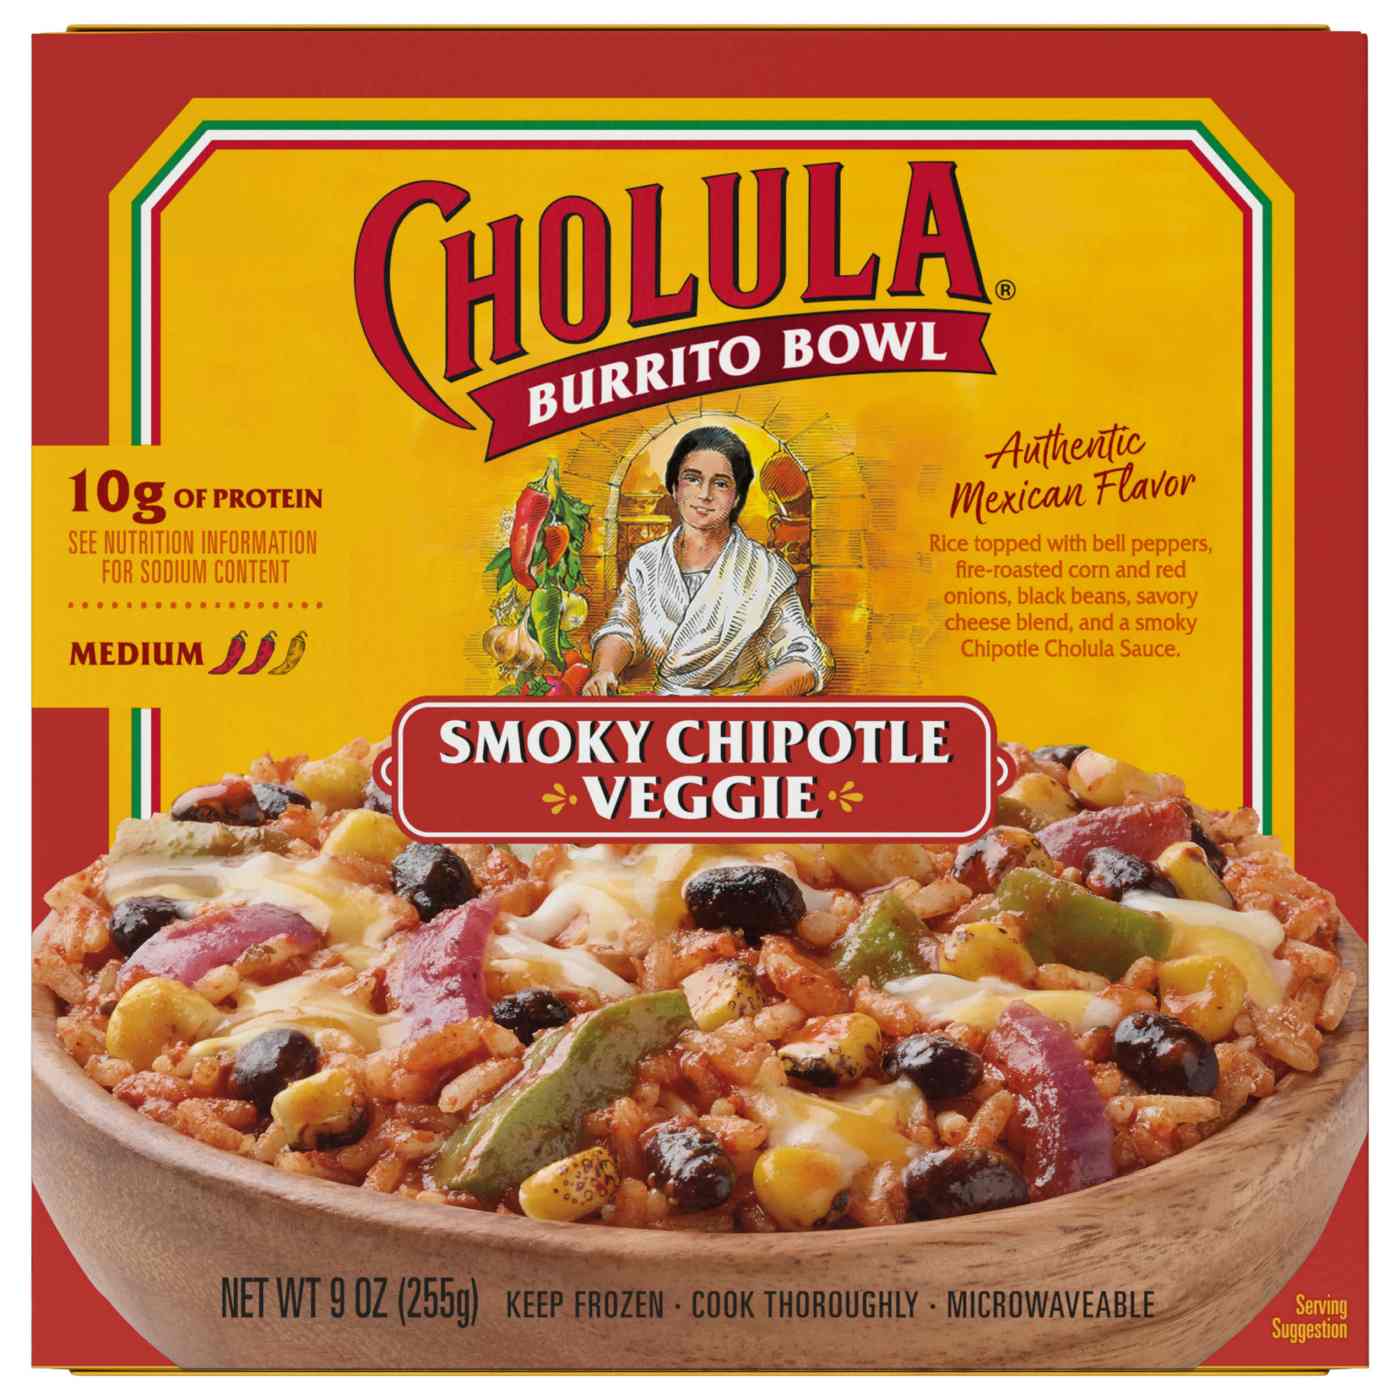 Cholula Burrito Bowl Smoky Chipotle Veggie Frozen Meal; image 1 of 9